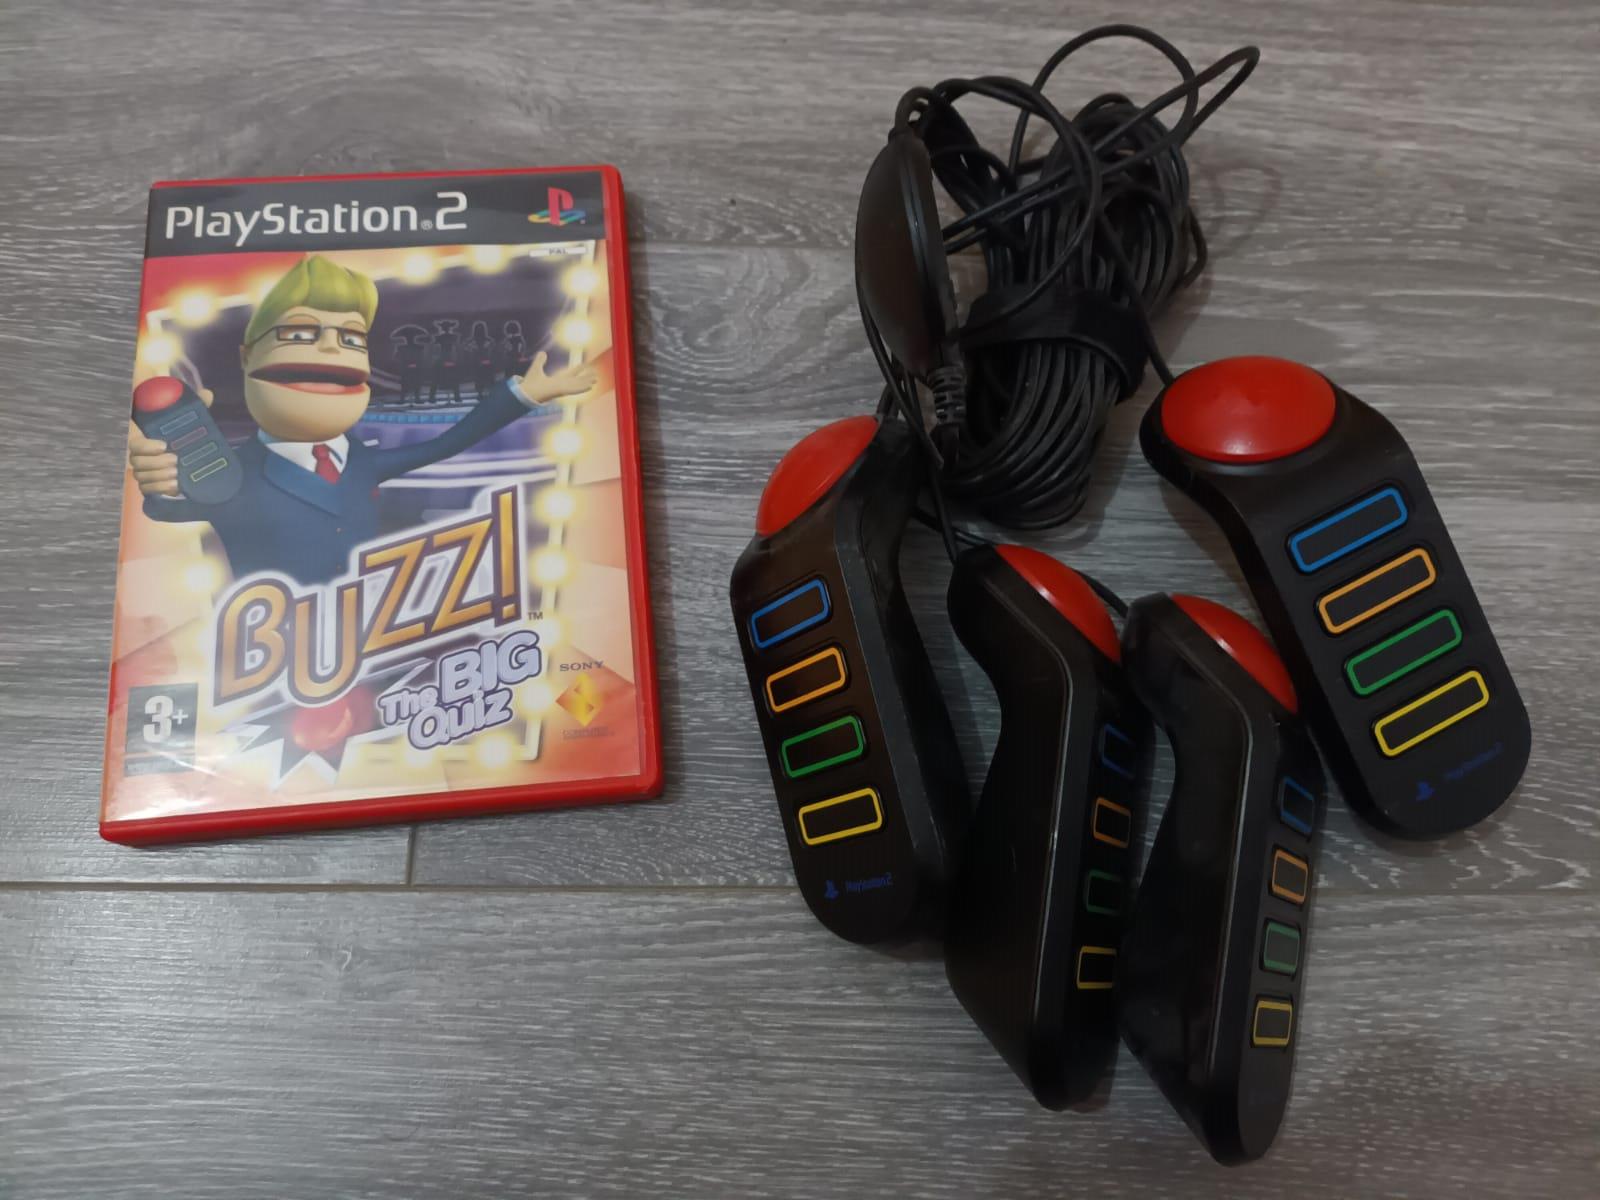 Set 4 Buzz Controller + Buzz The big quiz - PlayStation PS2